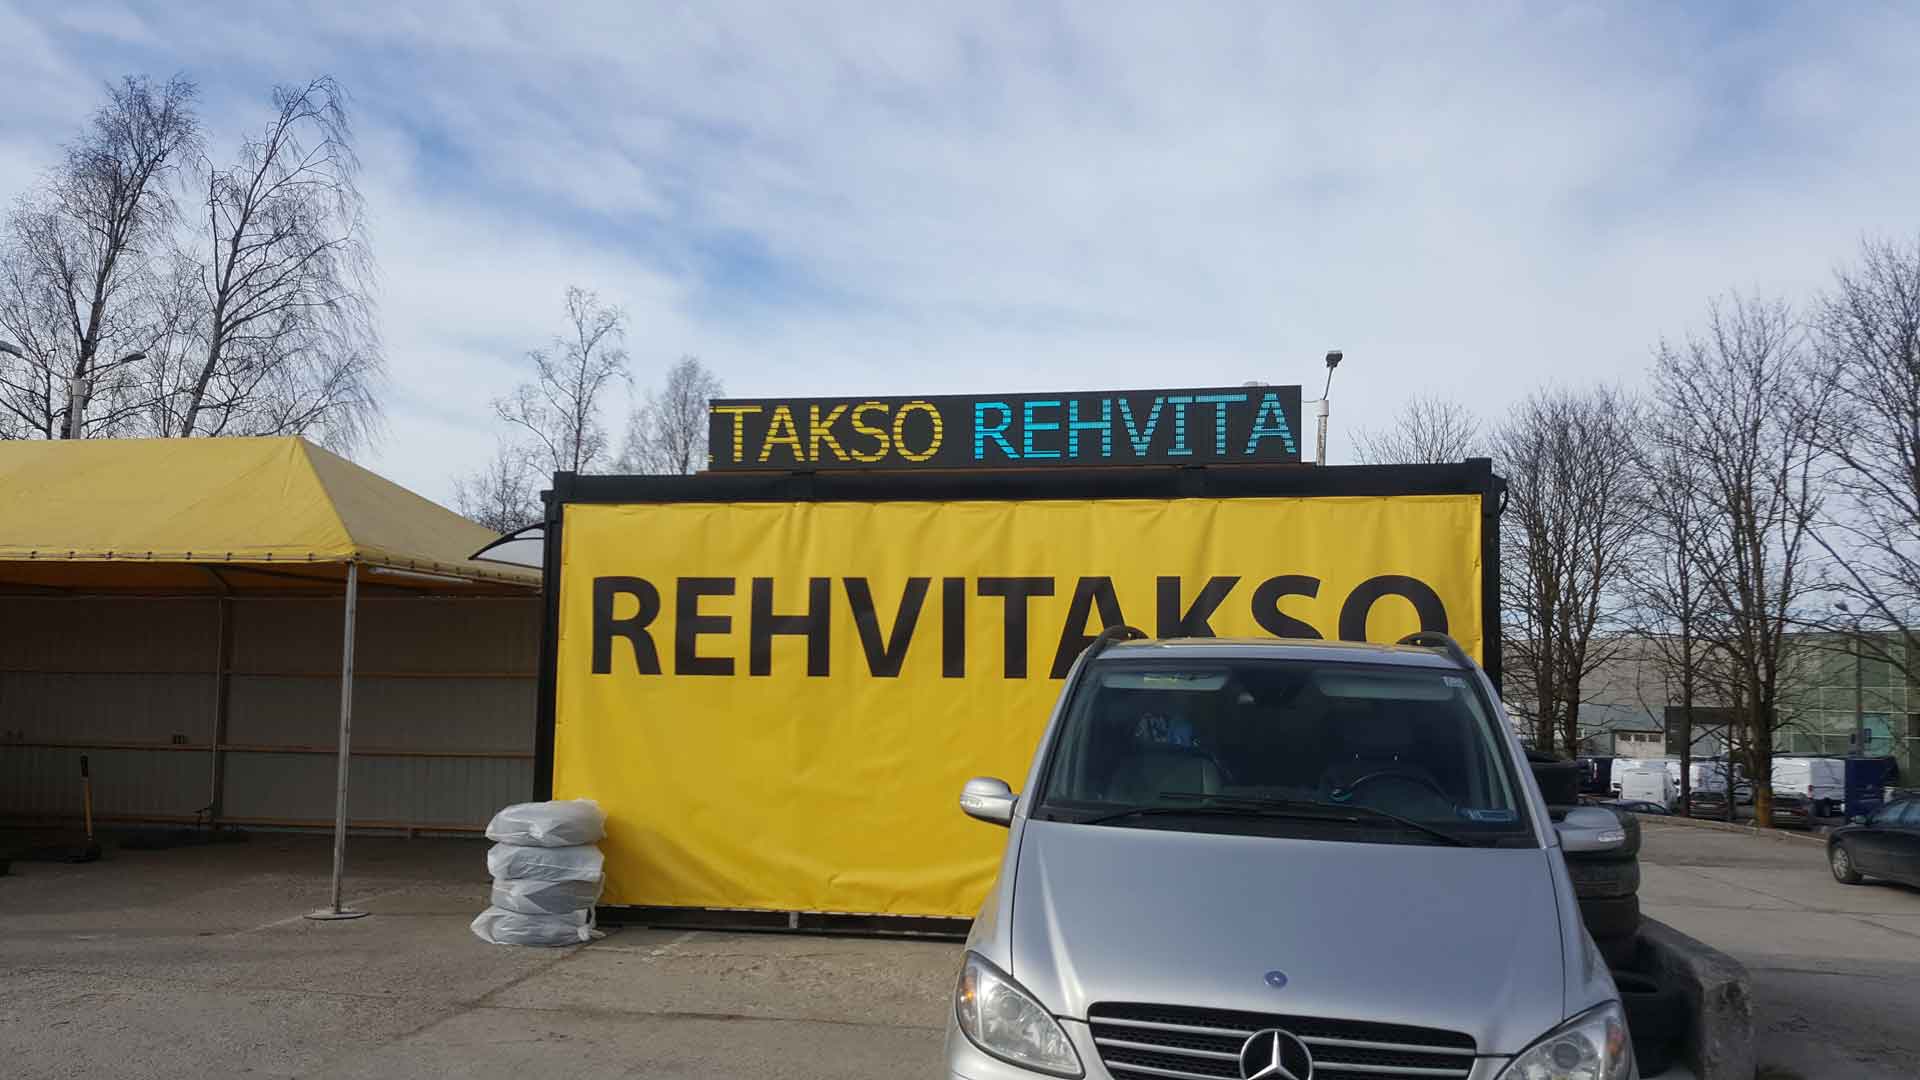 Rehvitakso, Tallinn